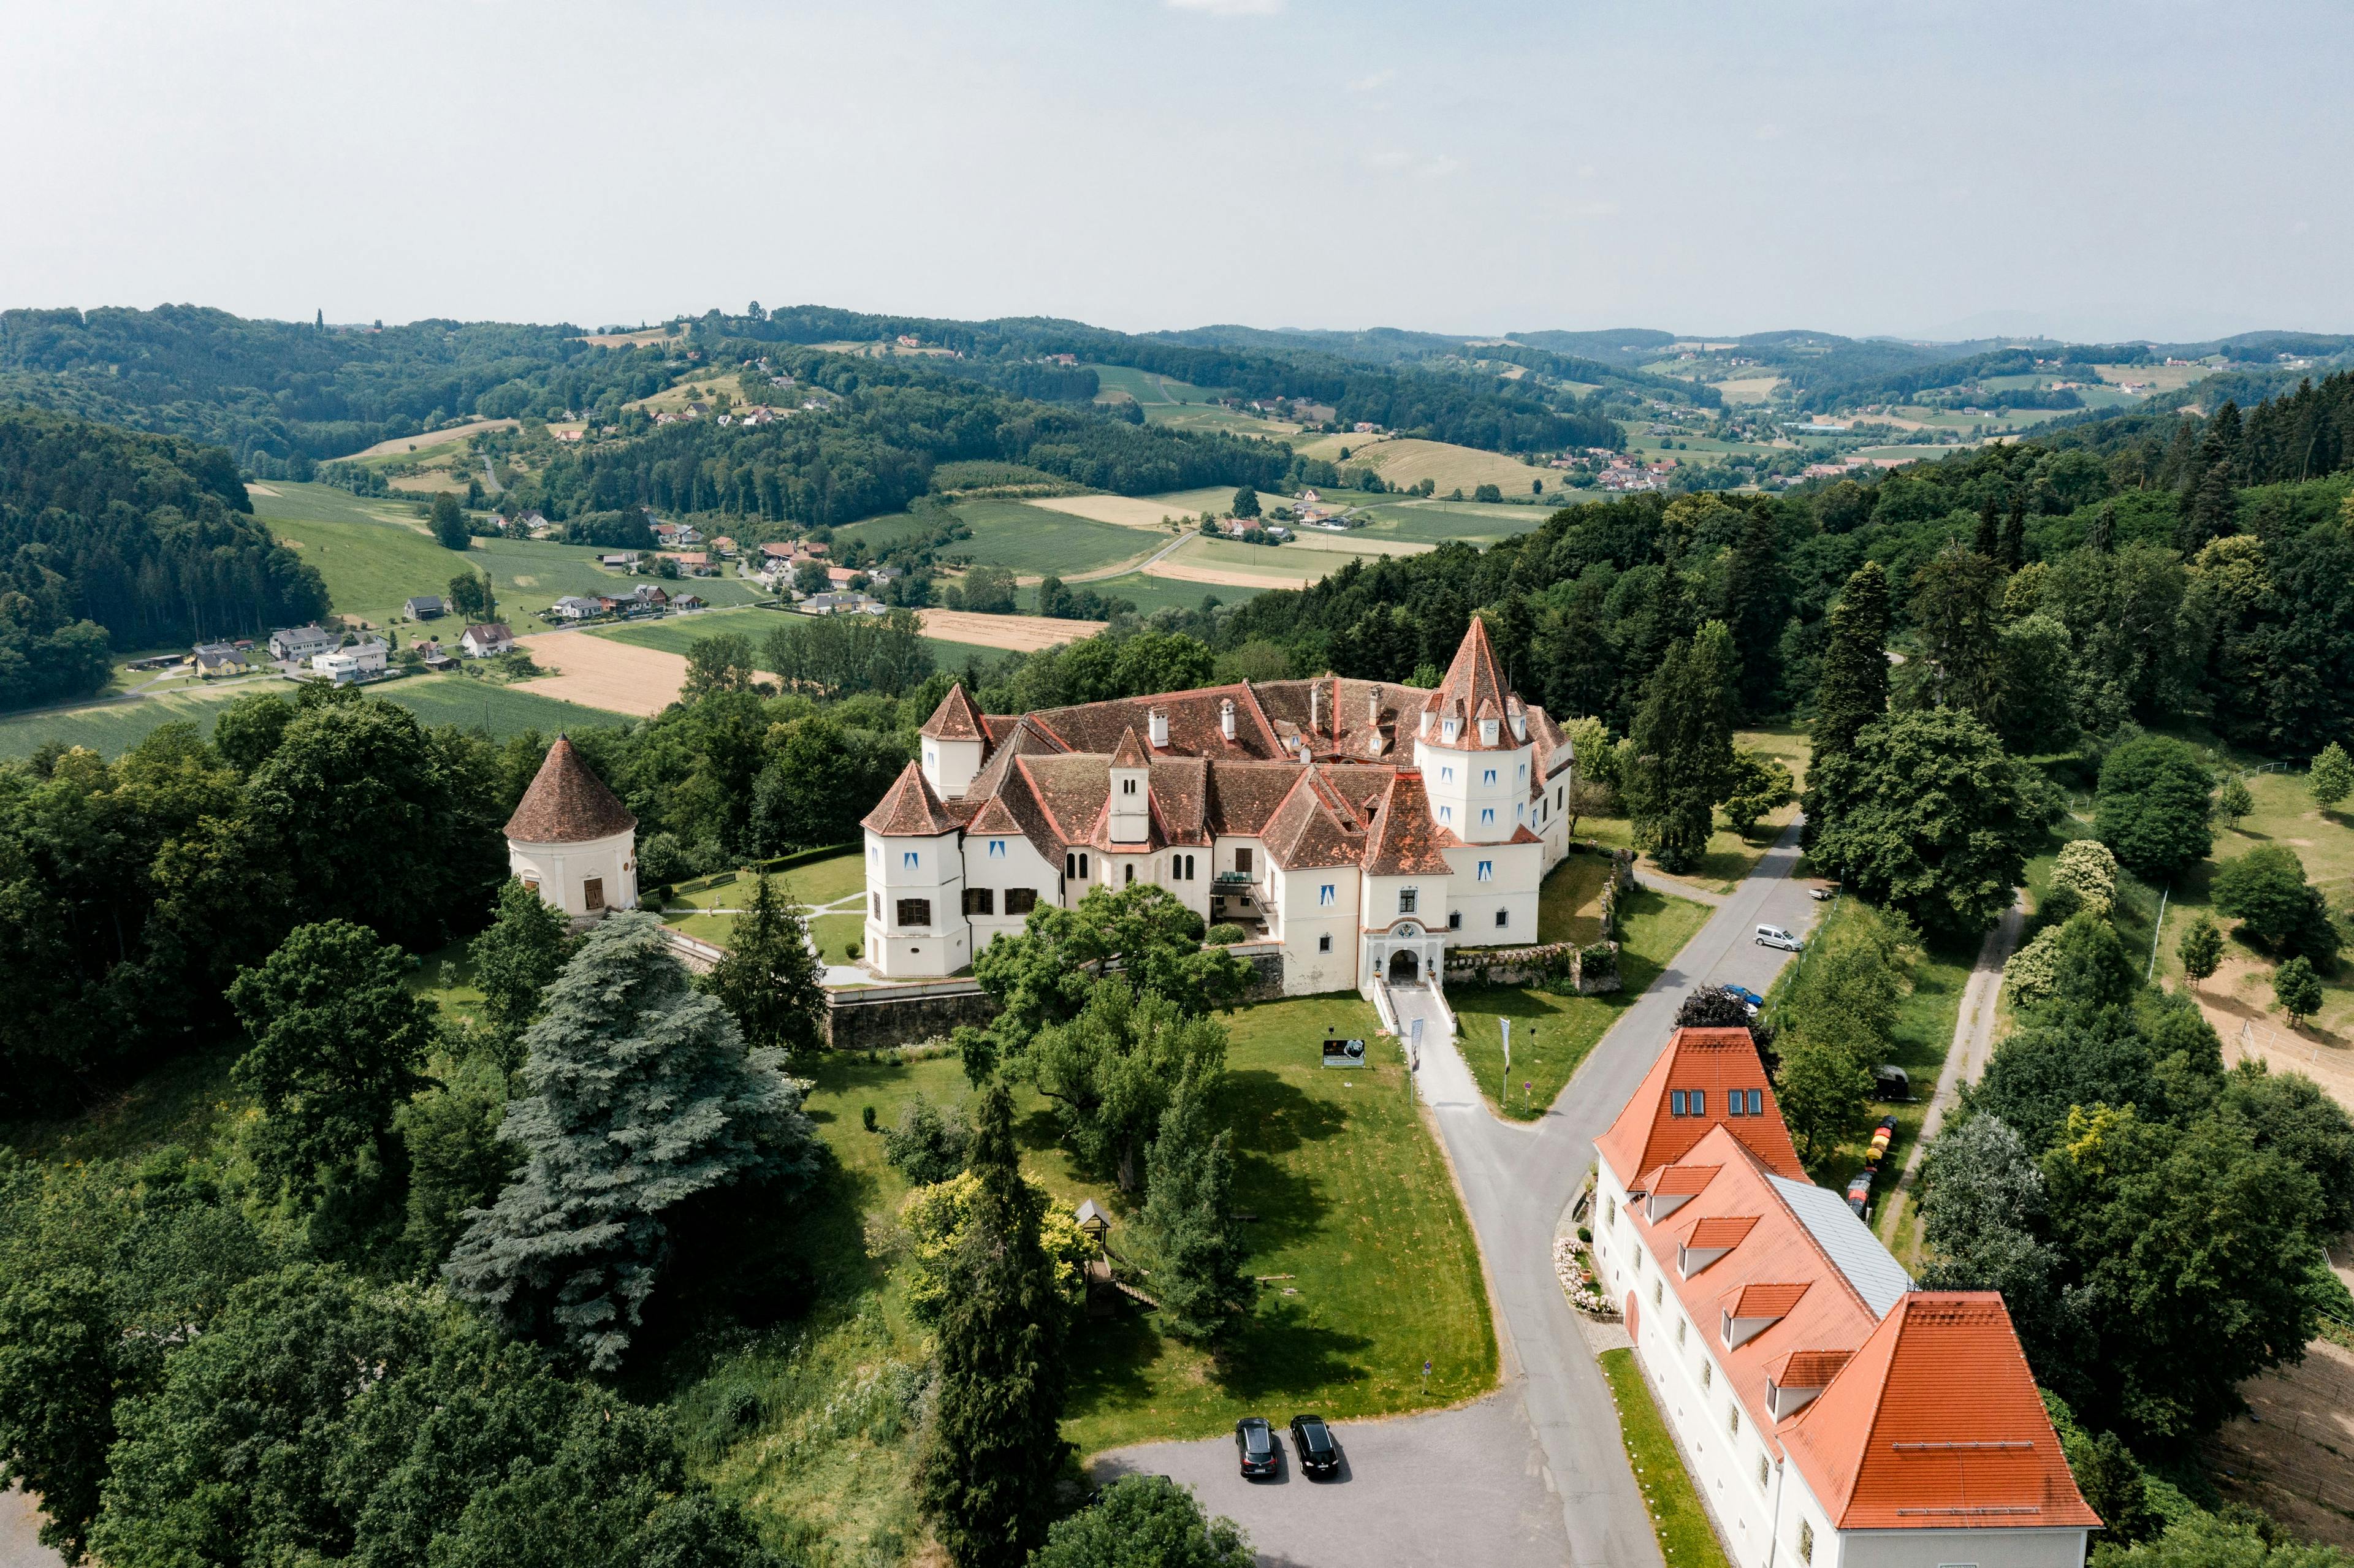 Ritteressen beim Schlosswirt Kornberg | Mittelalter erleben